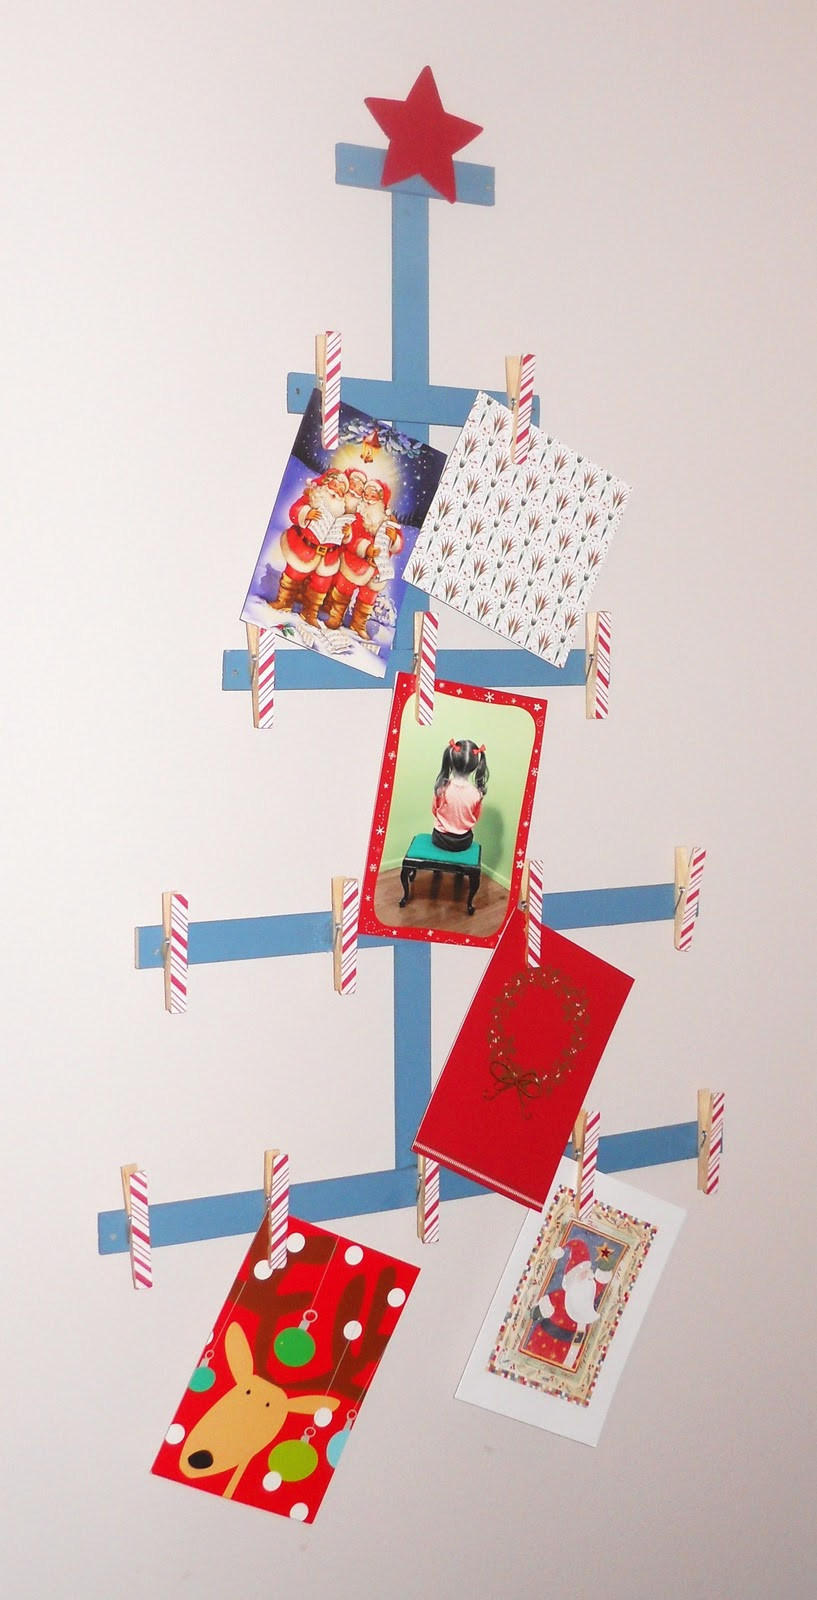 Best ideas about DIY Christmas Card Holder
. Save or Pin DIY Christmas Tree Card Holder Now.